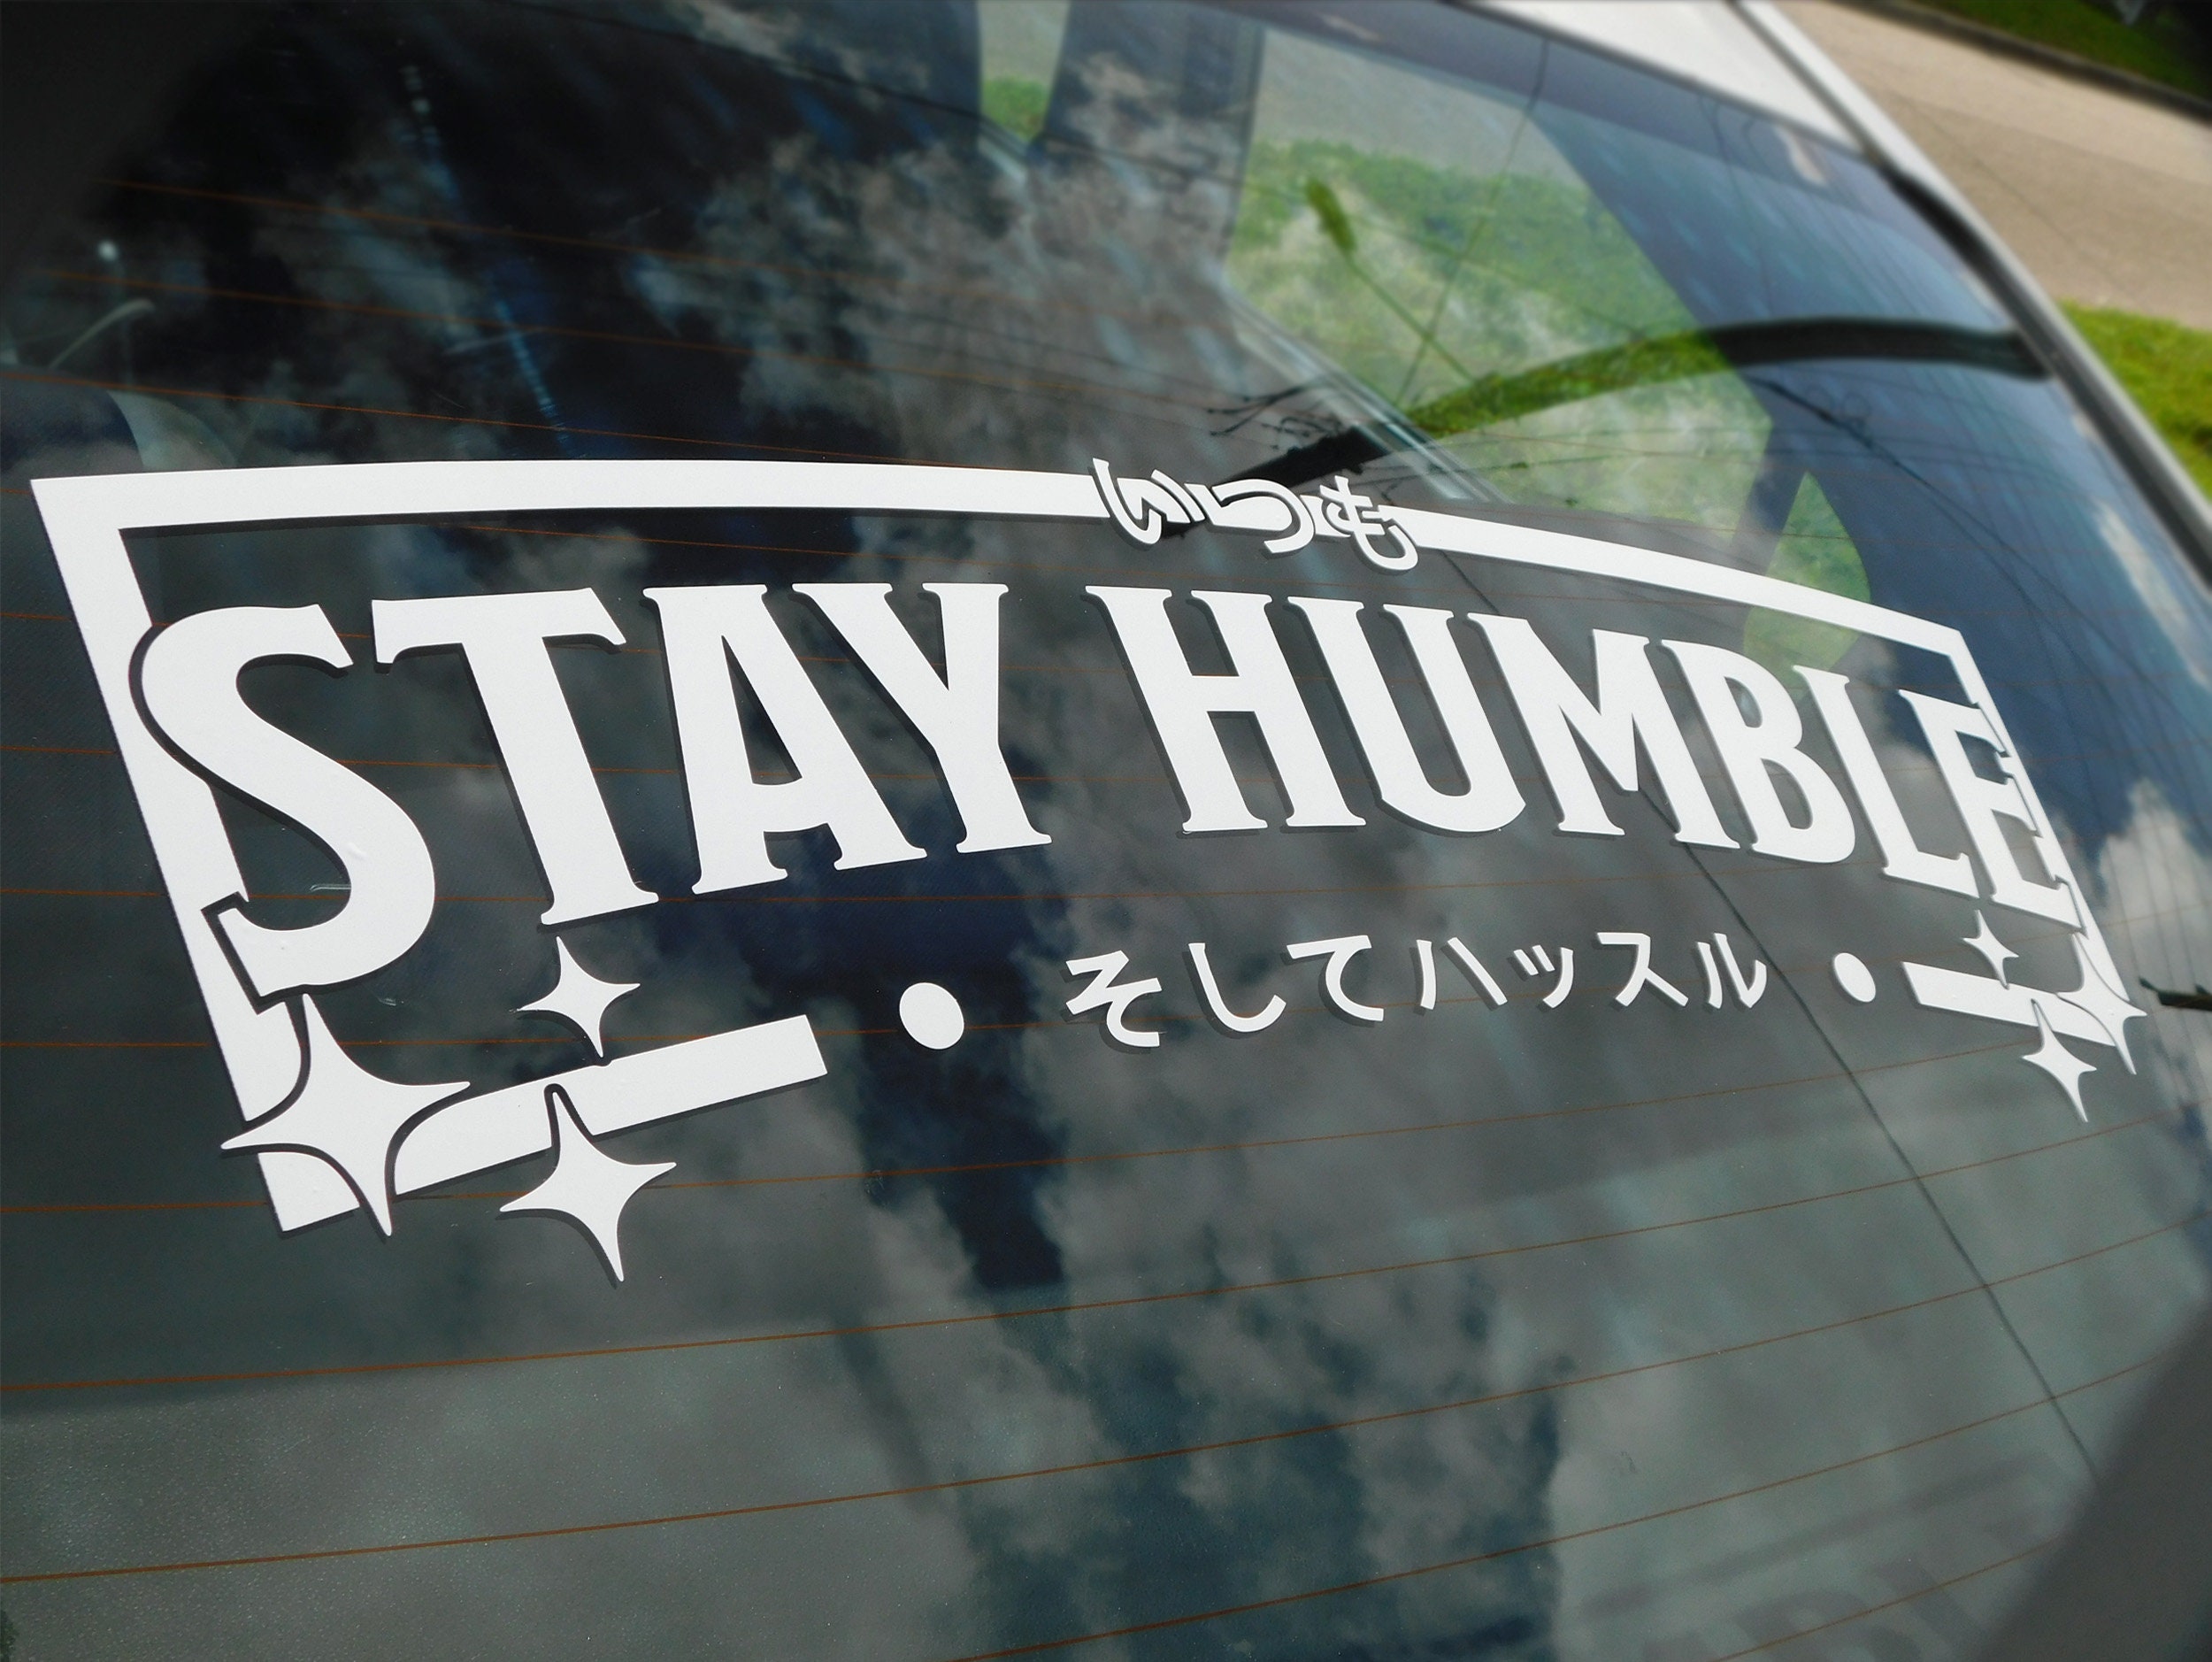 Ruthless Til Death Rear Window Decal Car Sticker Banner JDM Vinyl Graphic  Kanji